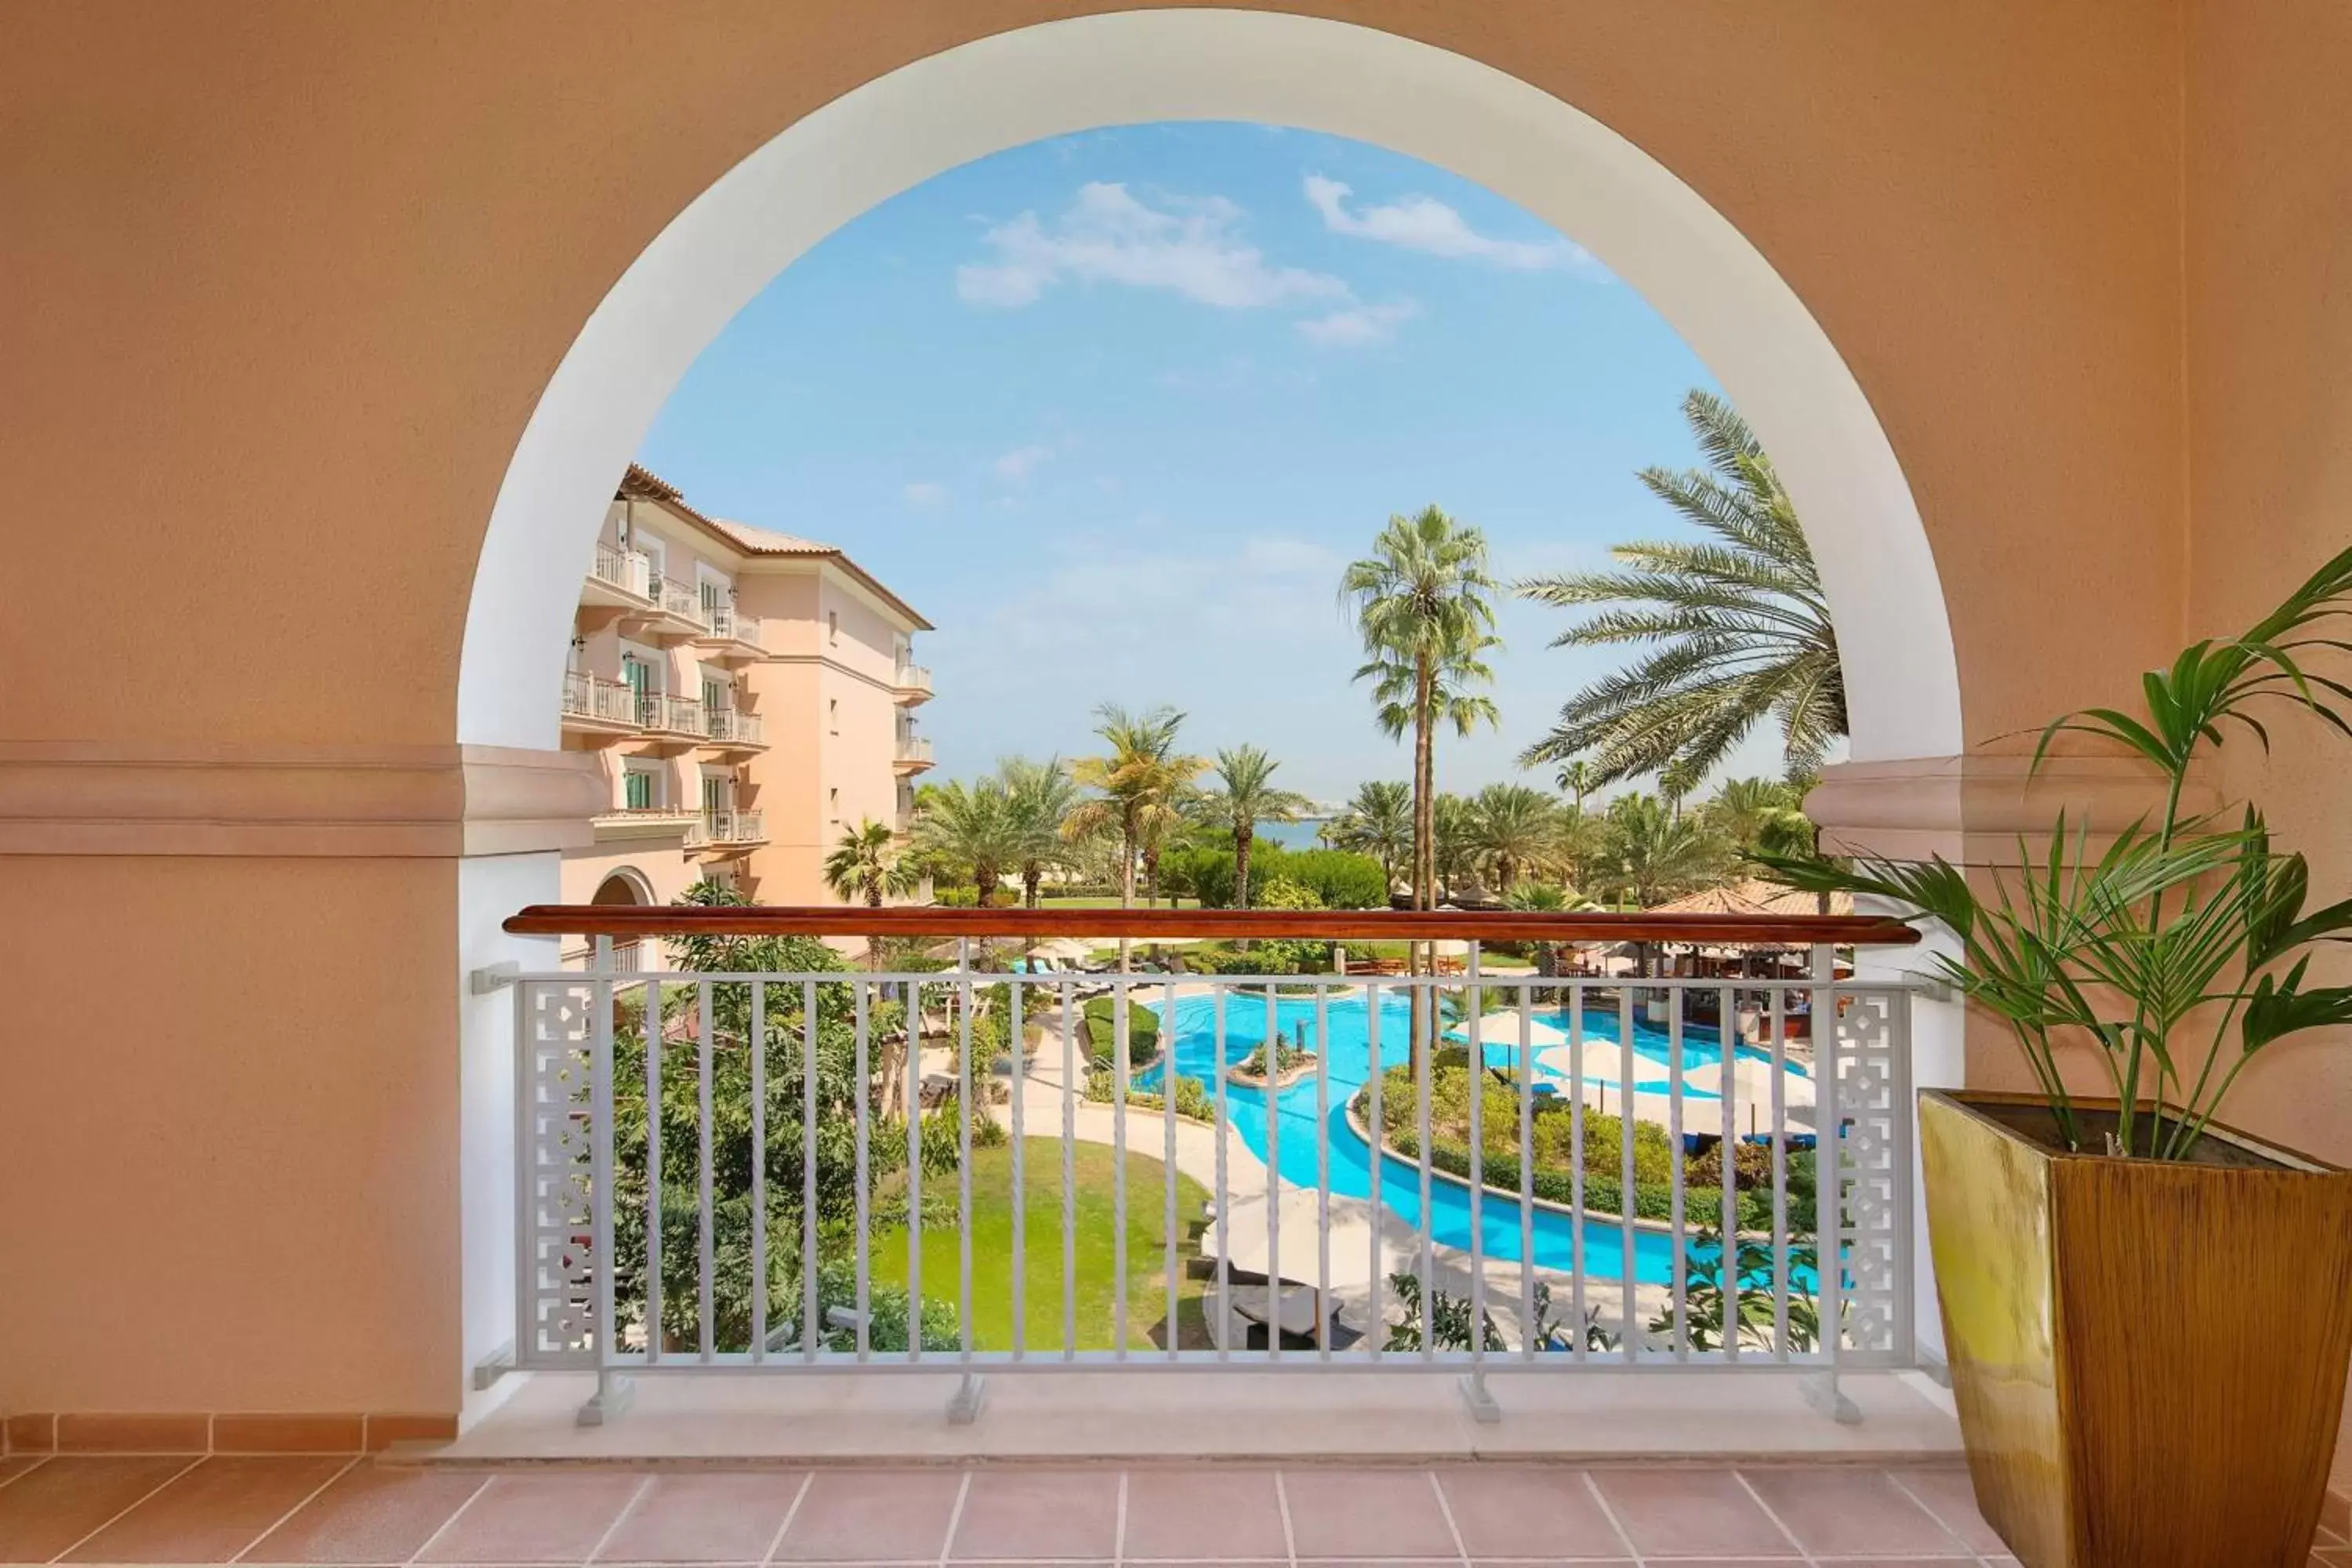 Photo of the whole room, Pool View in The Ritz-Carlton, Dubai